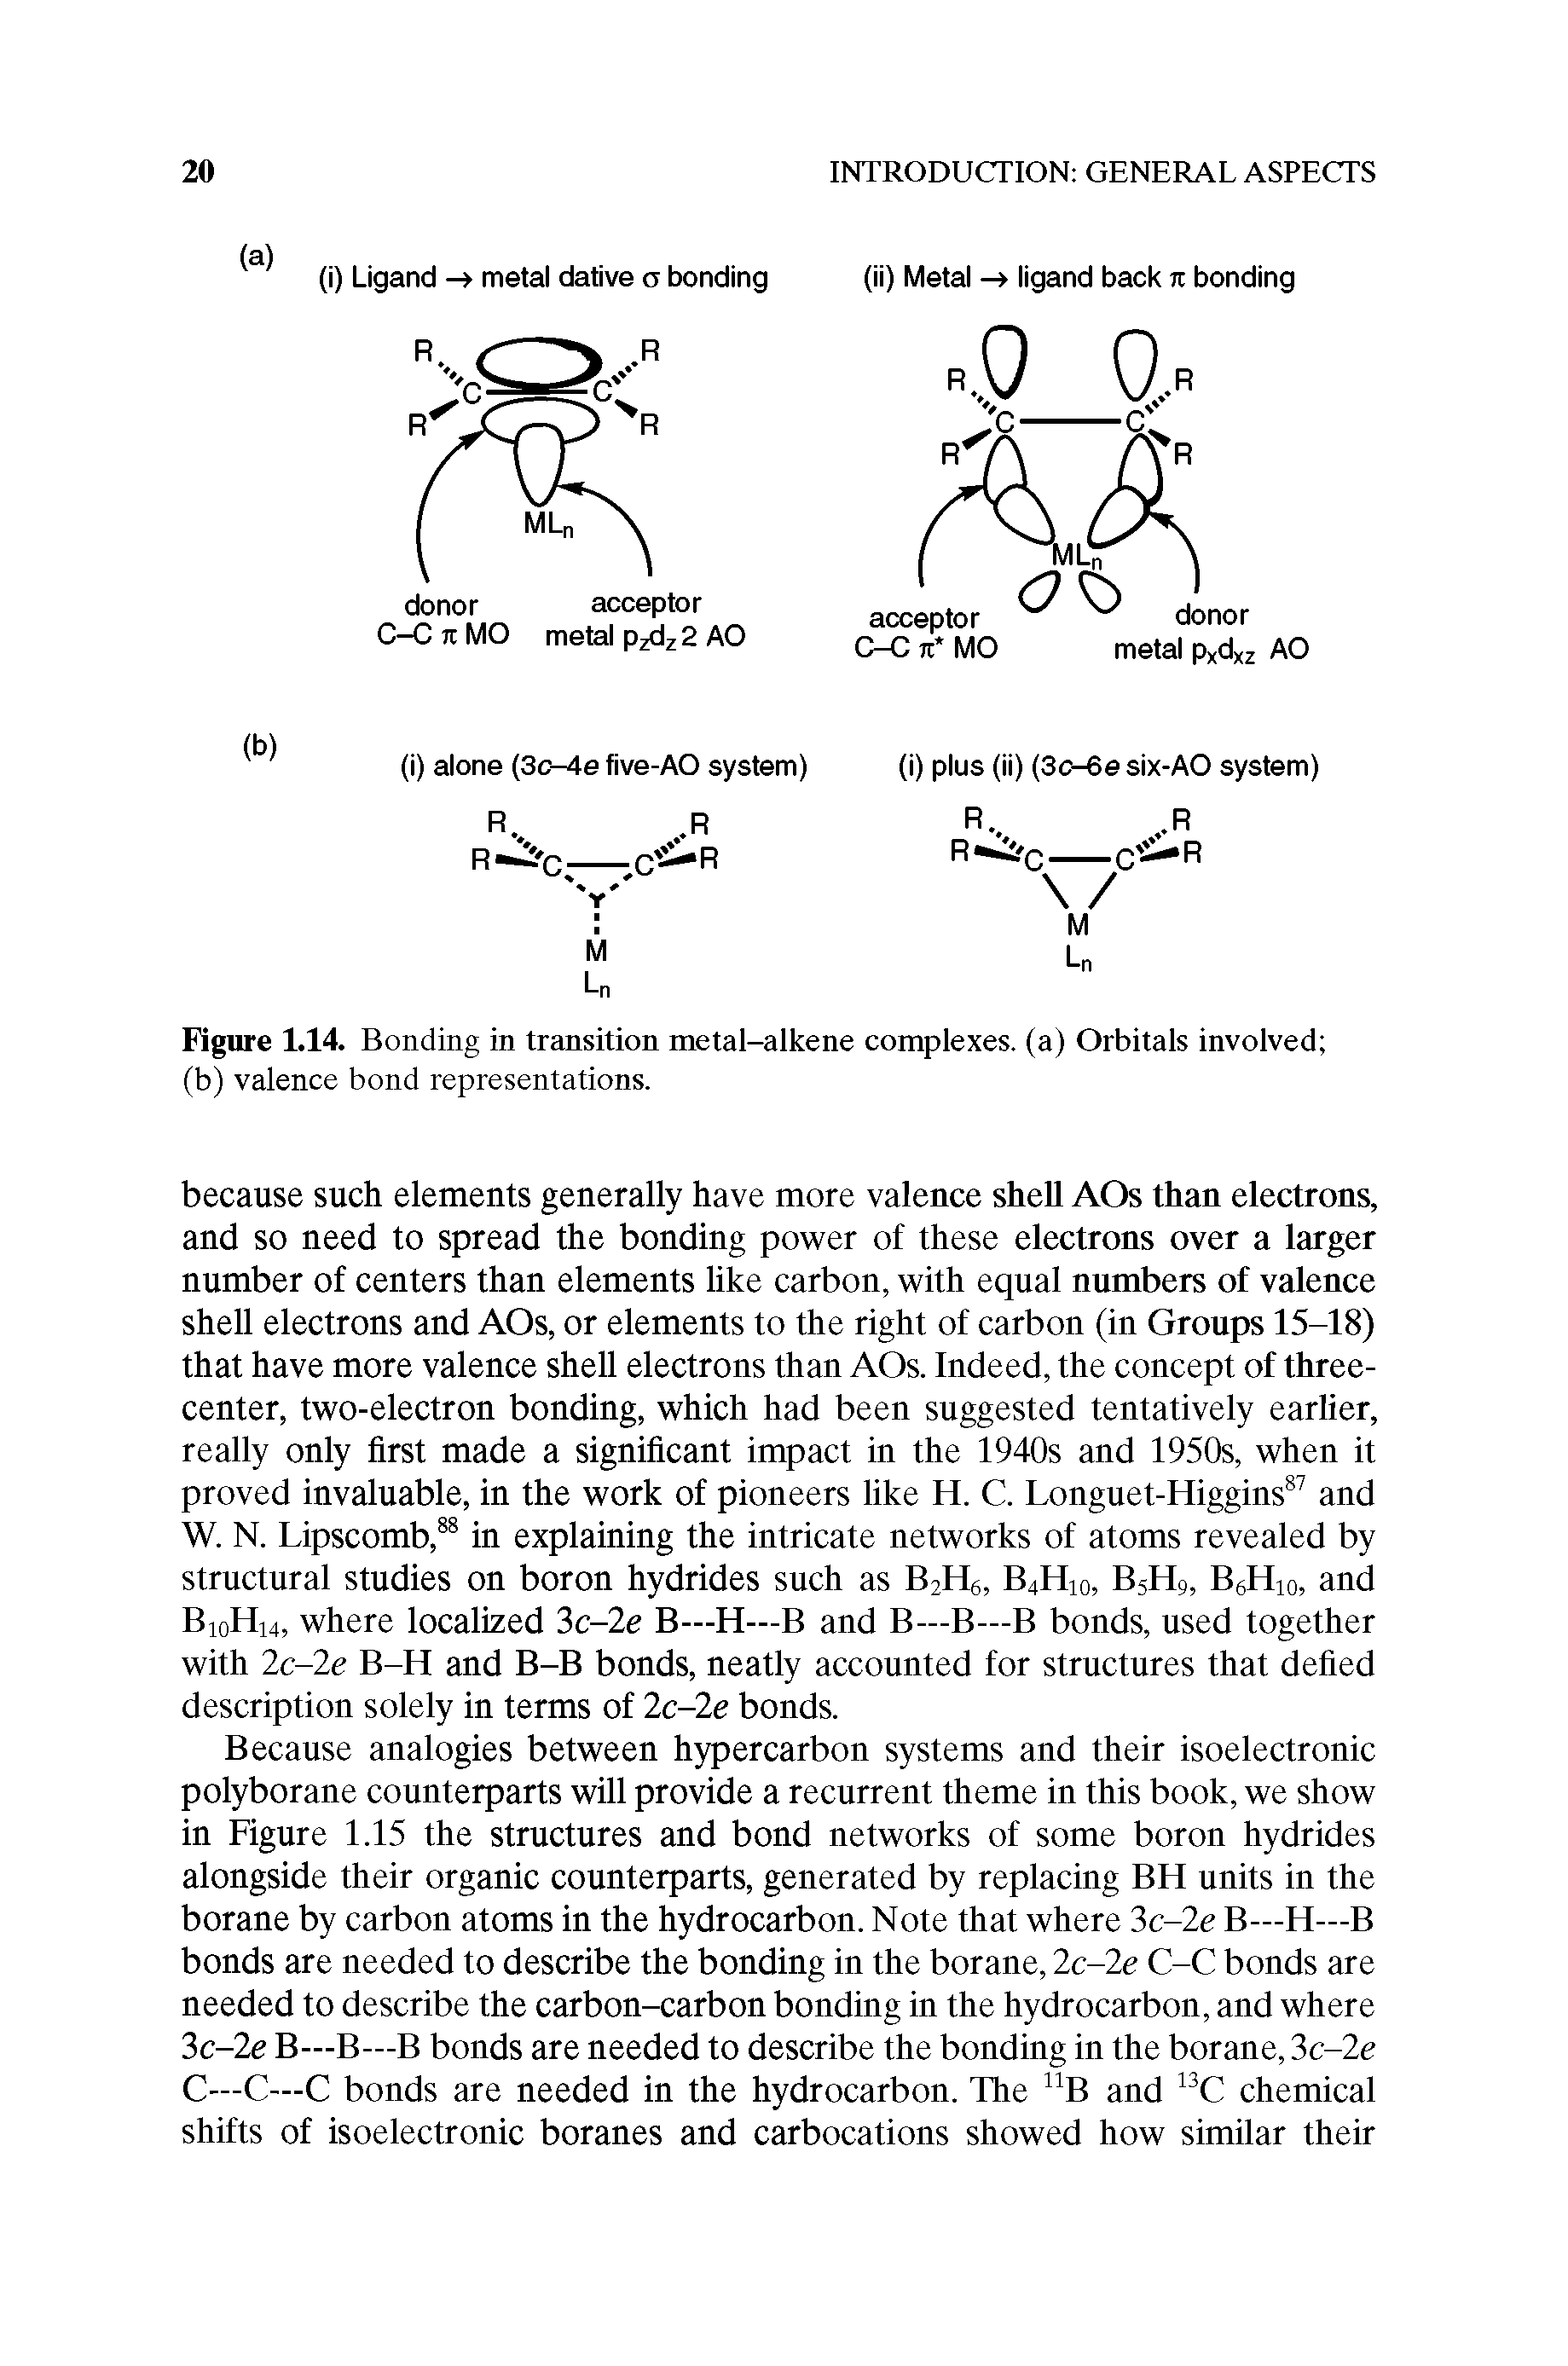 Figure 1.14. Bonding in transition metal-alkene complexes, (a) Orbitals involved (b) valence bond representations.